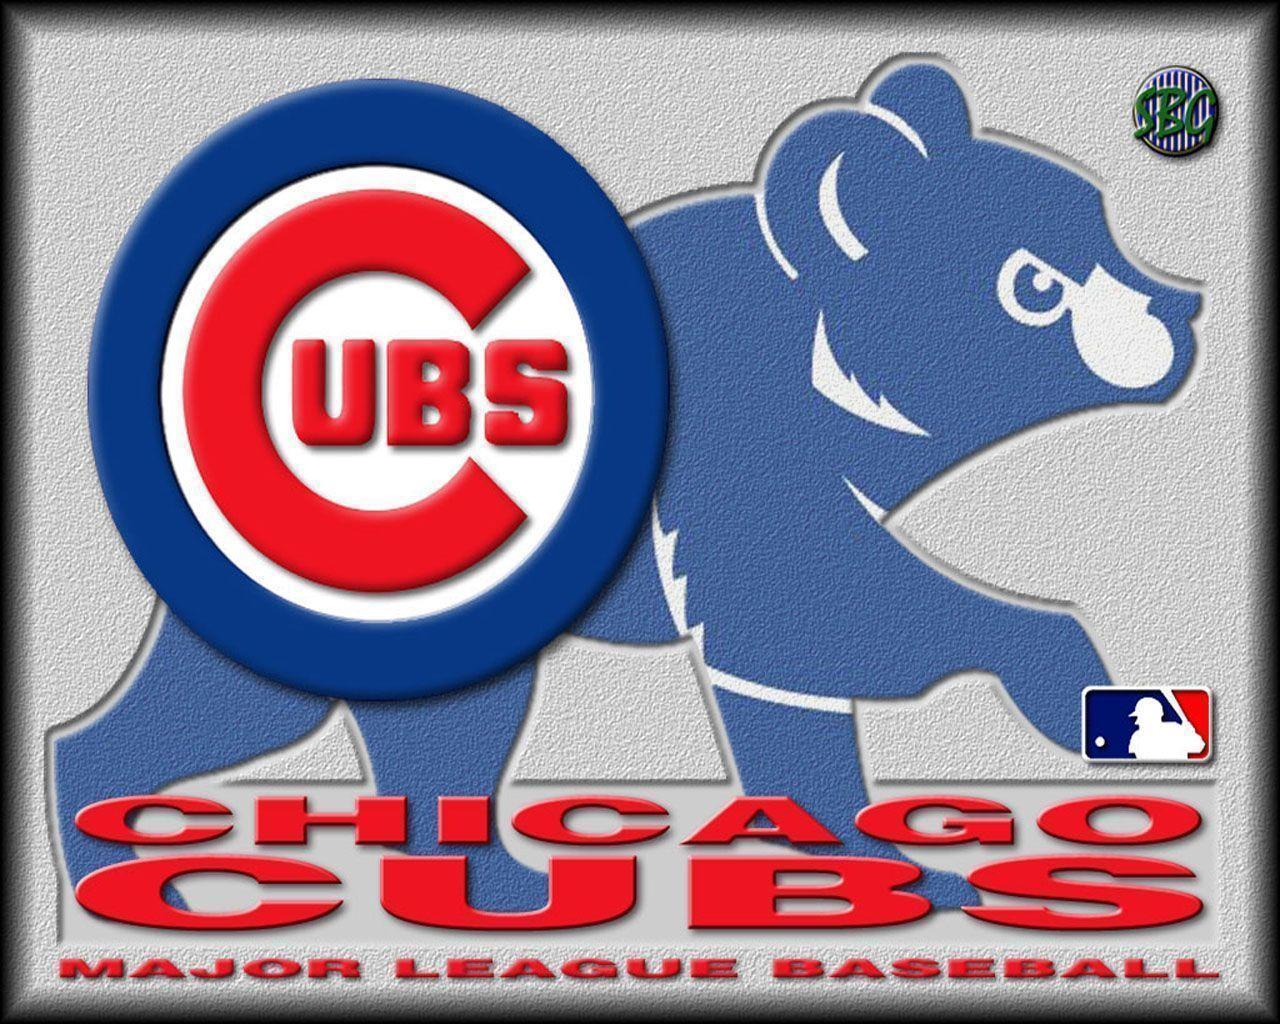 Outstanding Chicago Cubs wallpaper. Chicago Cubs wallpaper